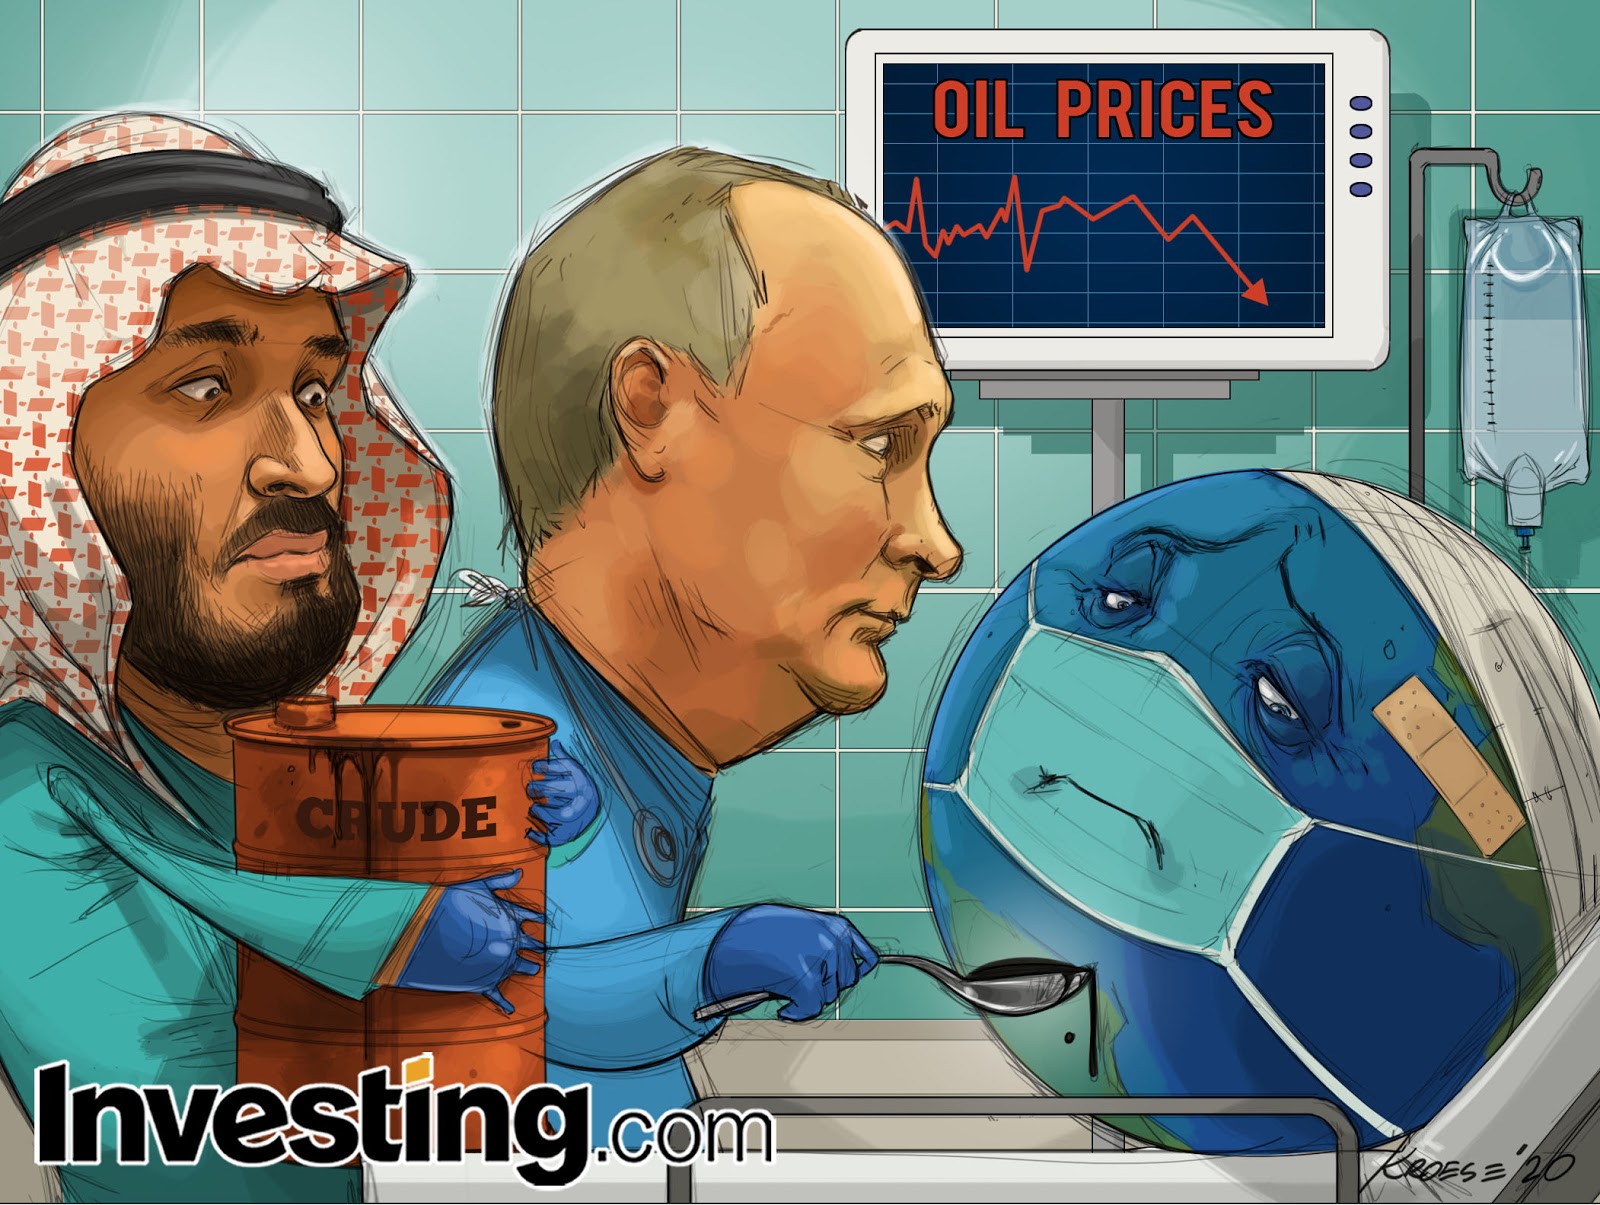 Crude Oil Prices Plunge